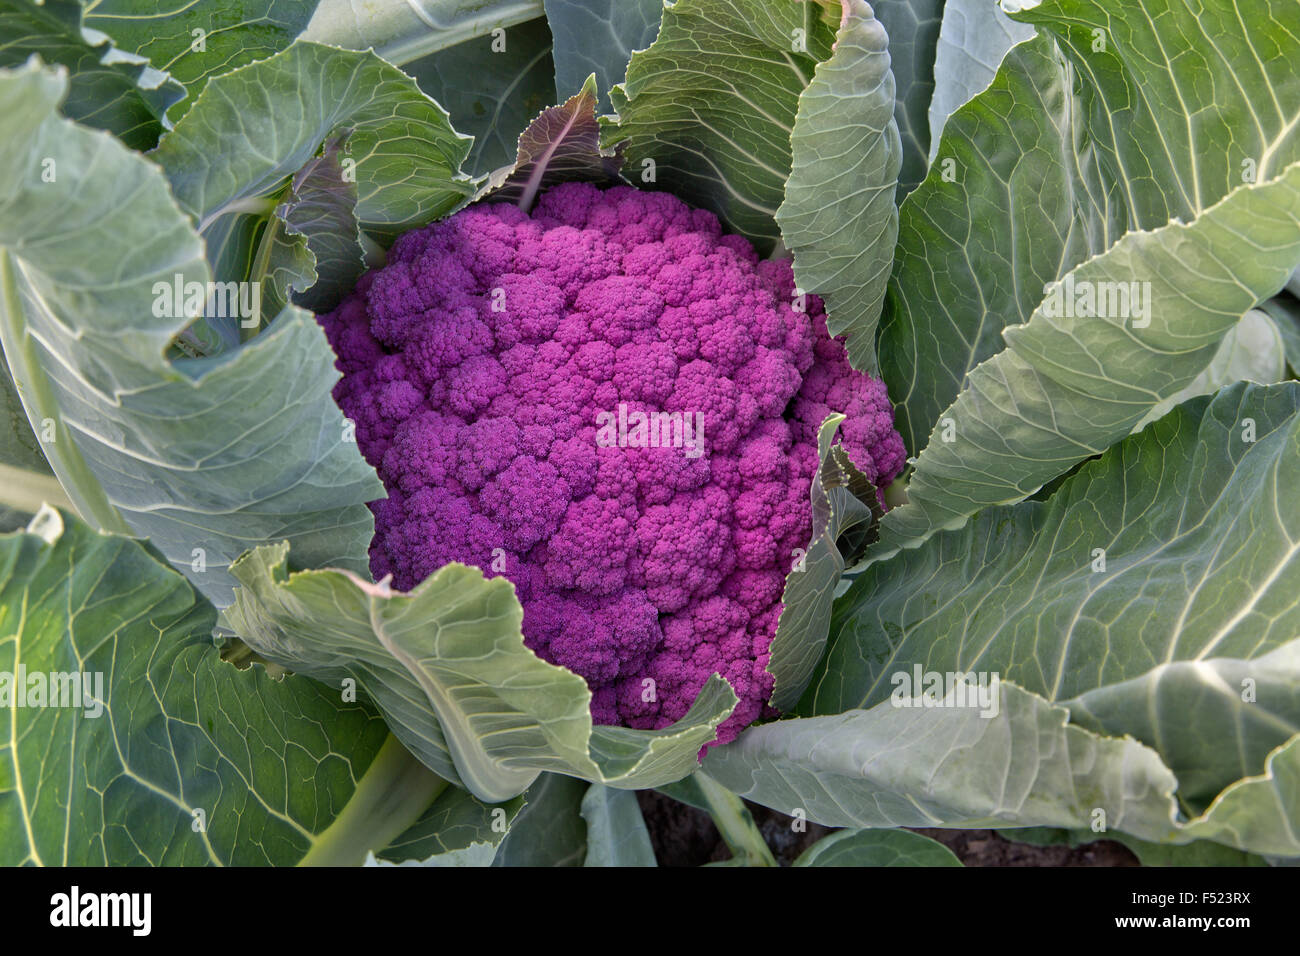 Nahaufnahme der reifen purpurnen Blumenkohl im Feld "Brassica oleracea". Stockfoto